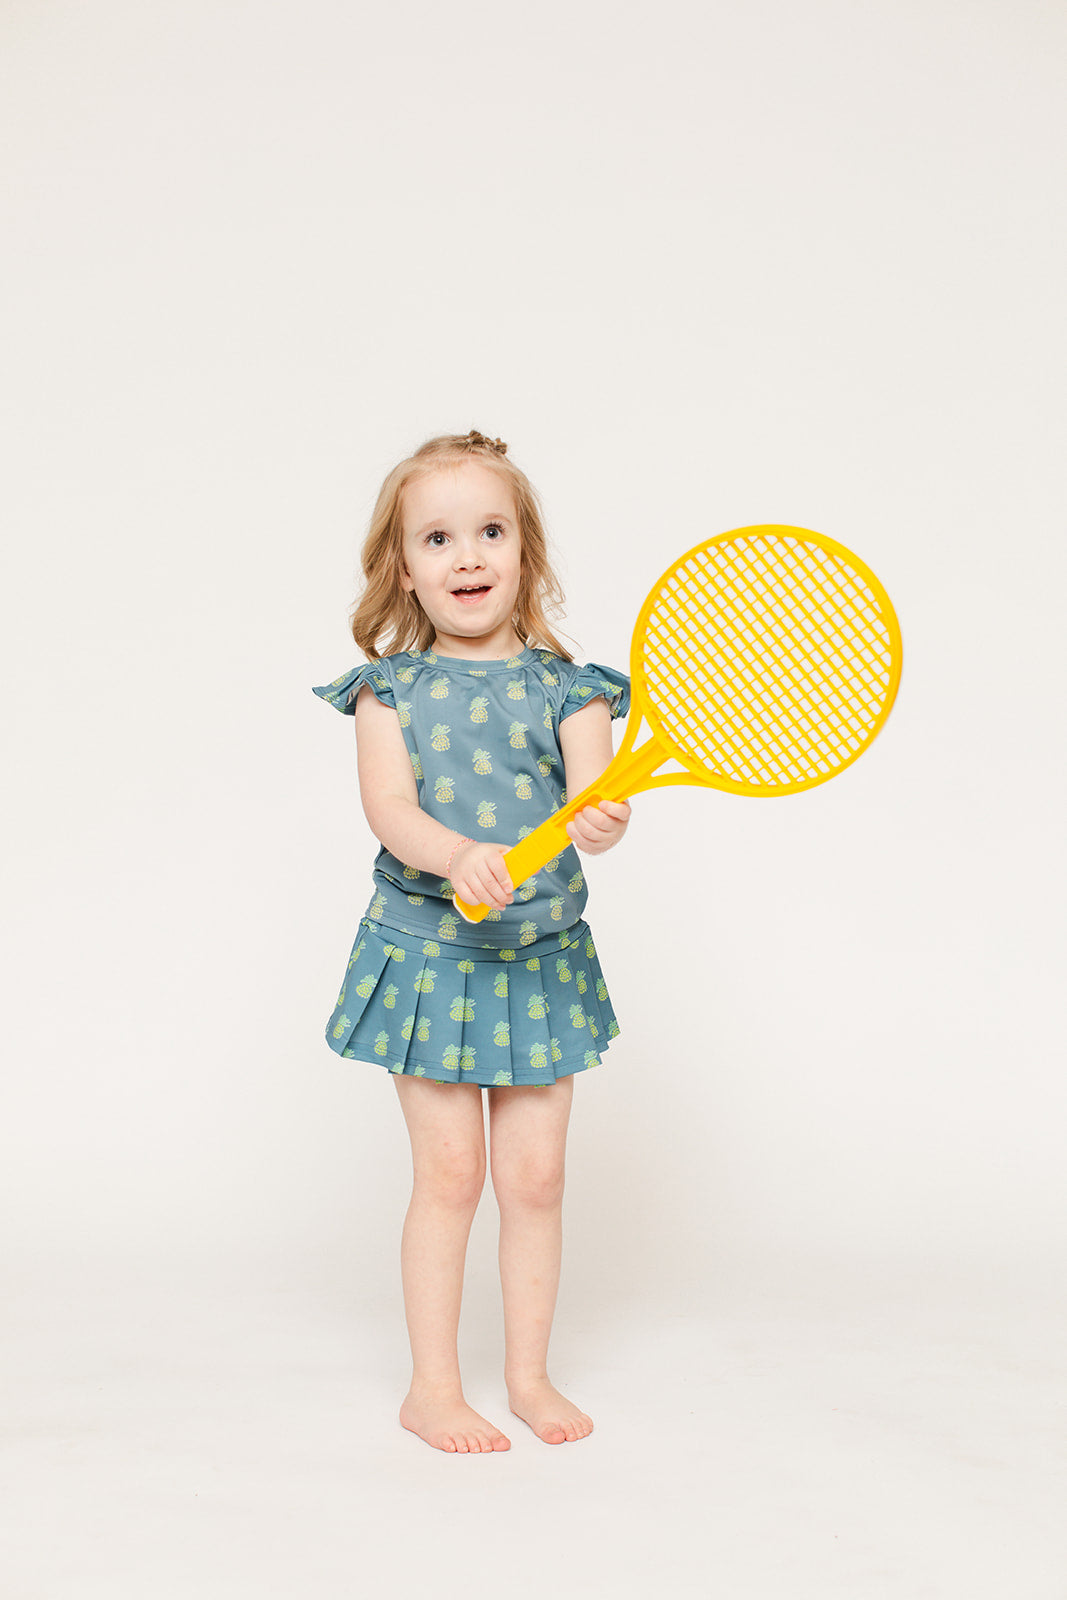 The Girl's Tennis Skirt and Top Set - Pineapple